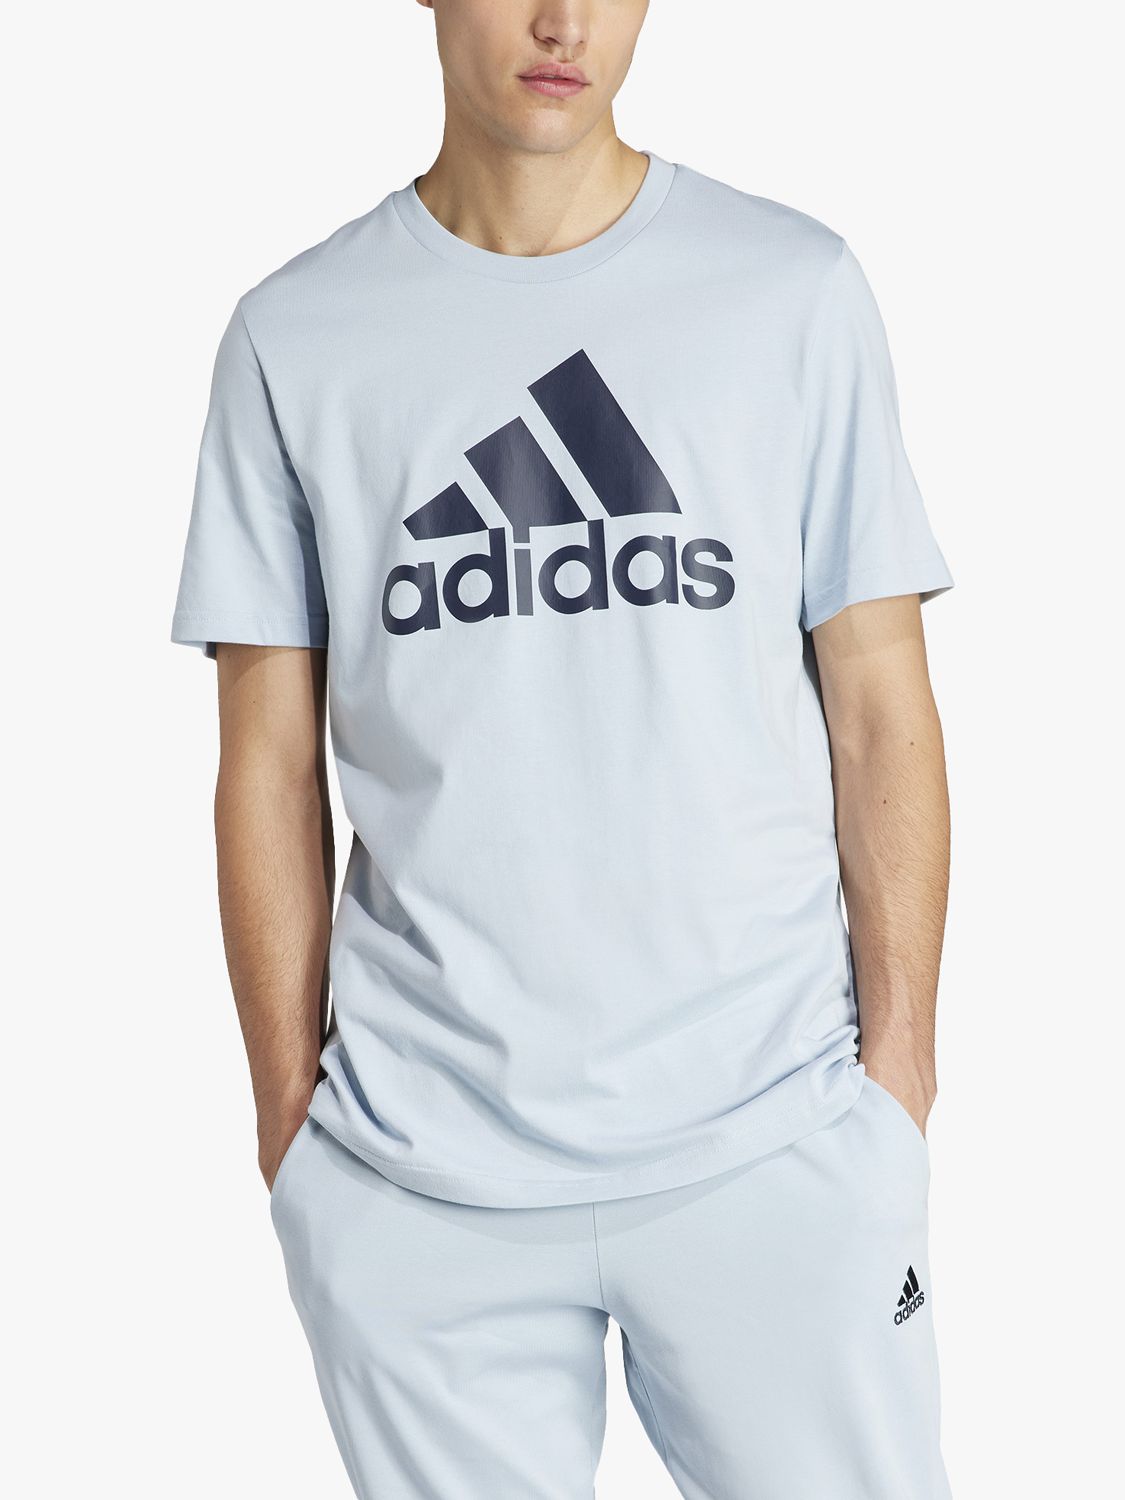 adidas Essentials Single Jersey Logo T-Shirt, Blue, S